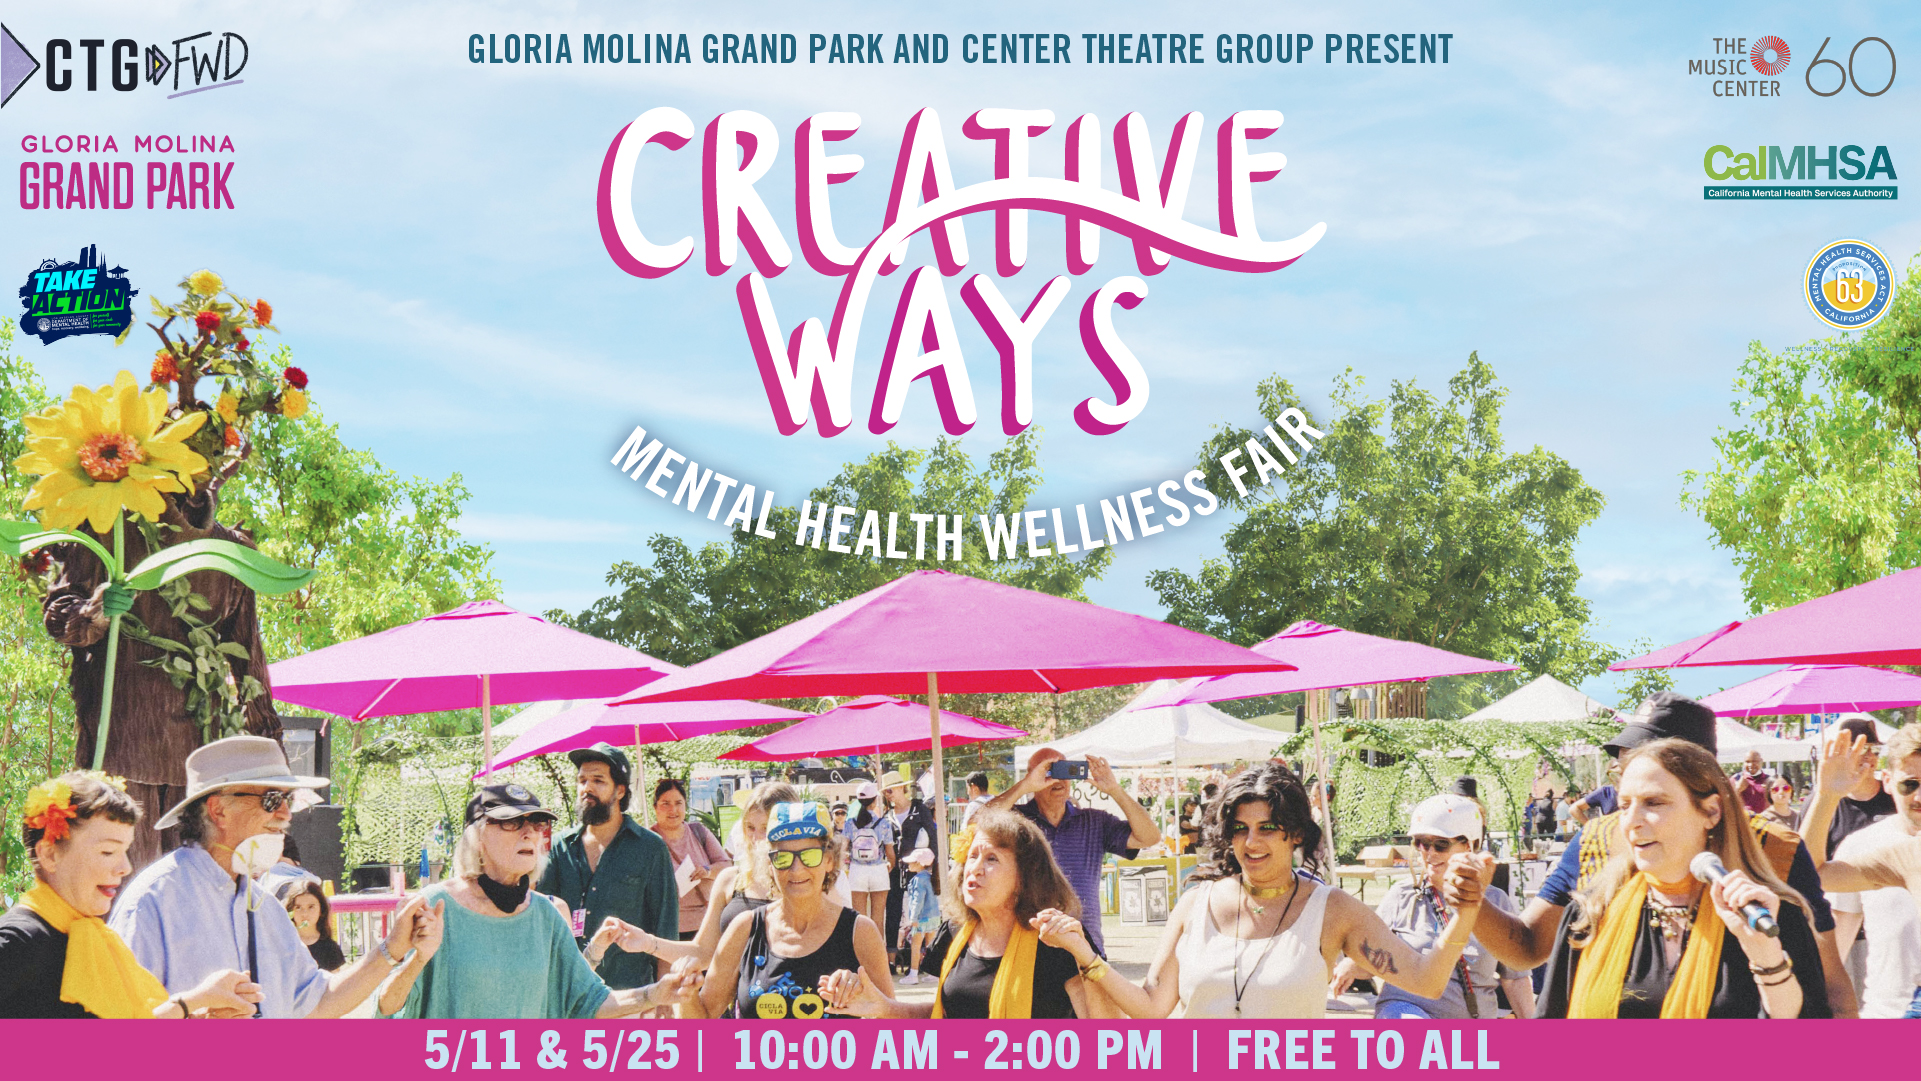 Gloria Molina Grand Park and Center Theatre Group’s Creative Ways | Mental Health Wellness Fair